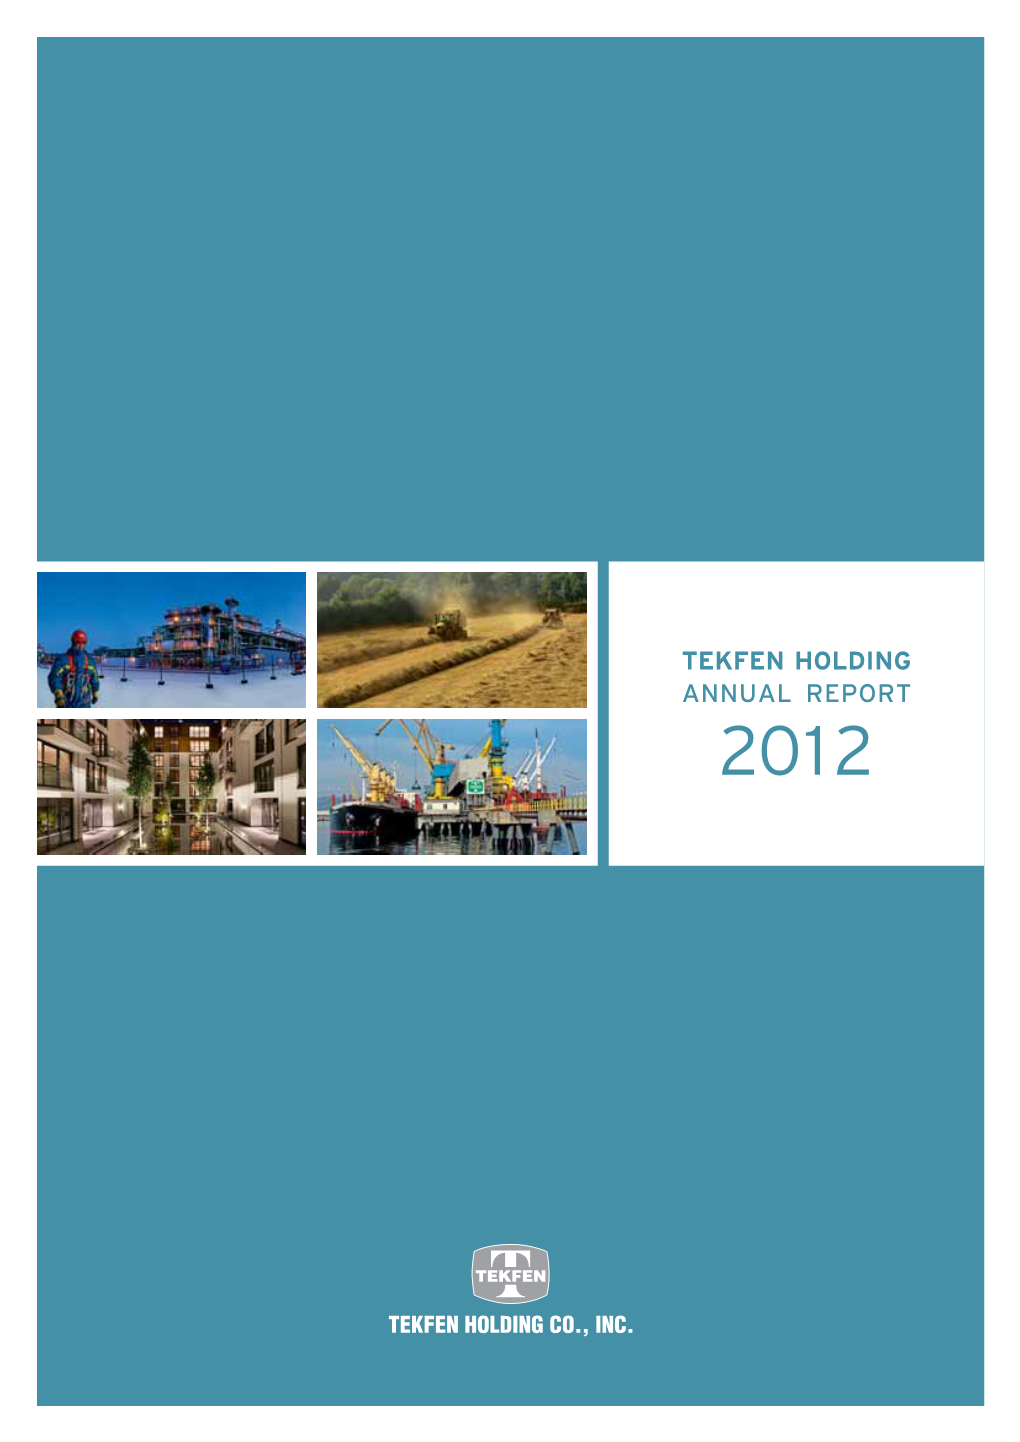 Tekfen Holding Annual Report 201 2 Tekfen Holding Annual Report 2012